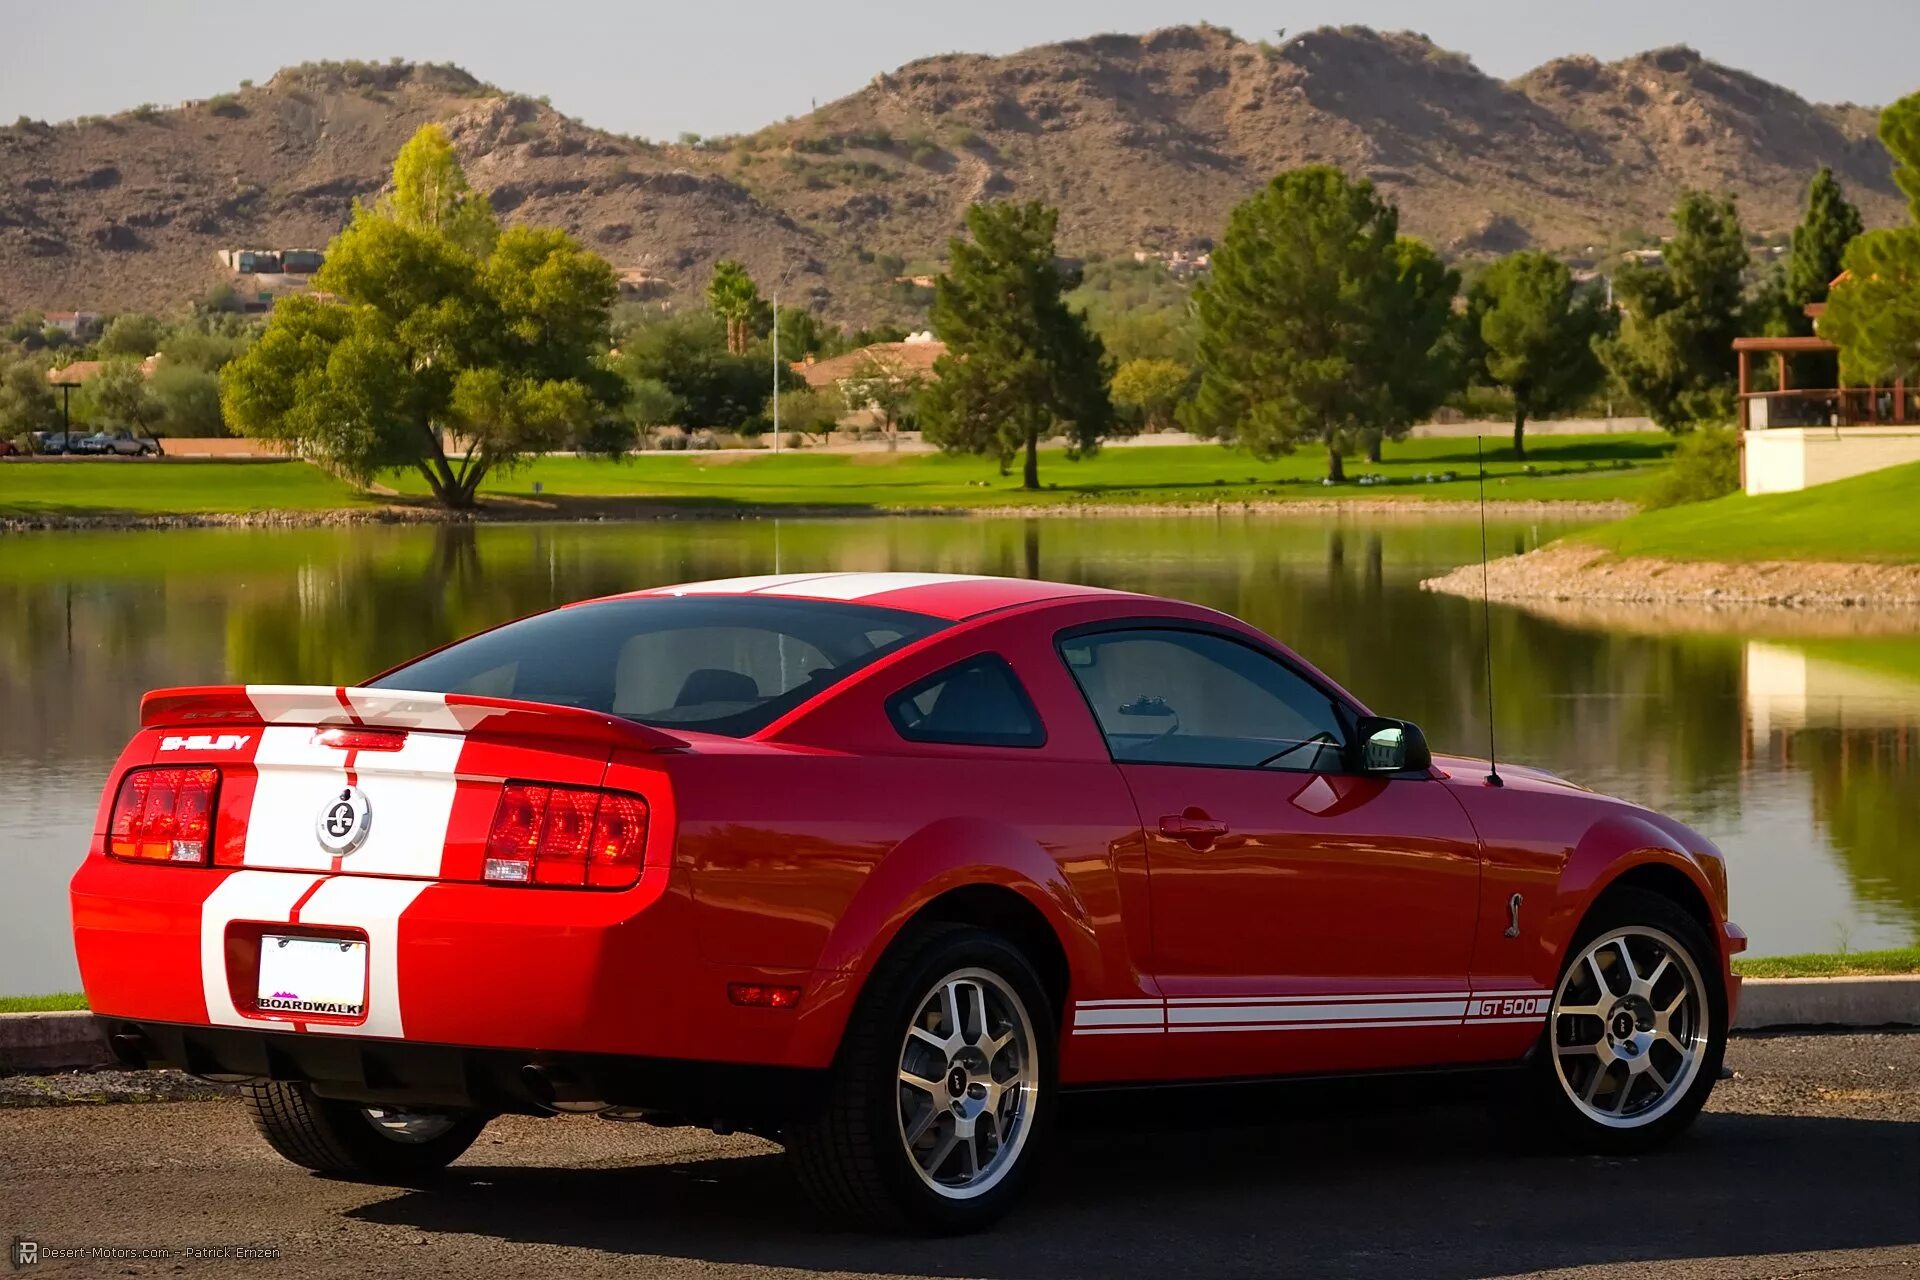 Ford Mustang Shelby gt500 оранжевый. Shelby gt500 2008. Shelby Mustang 2008 красный. Ford Mustang Shelby 2022. Мустанг 2008